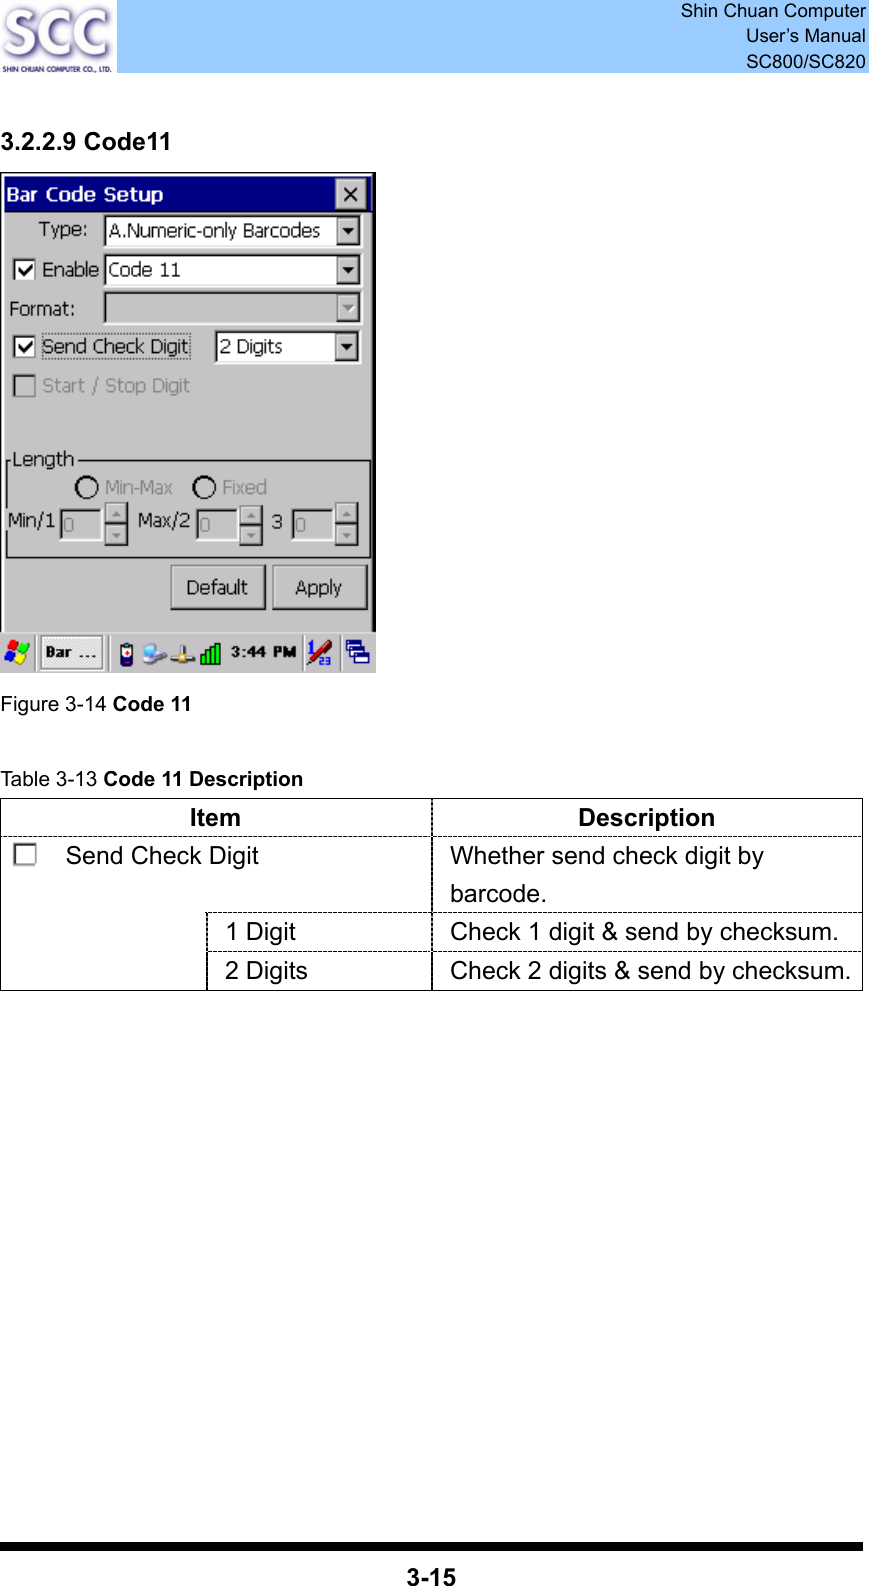  Shin Chuan Computer User’s Manual SC800/SC820  3-15  3.2.2.9 Code11  Figure 3-14 Code 11  Table 3-13 Code 11 Description Item Description Send Check Digit  Whether send check digit by barcode. 1 Digit  Check 1 digit &amp; send by checksum.  2 Digits  Check 2 digits &amp; send by checksum.             